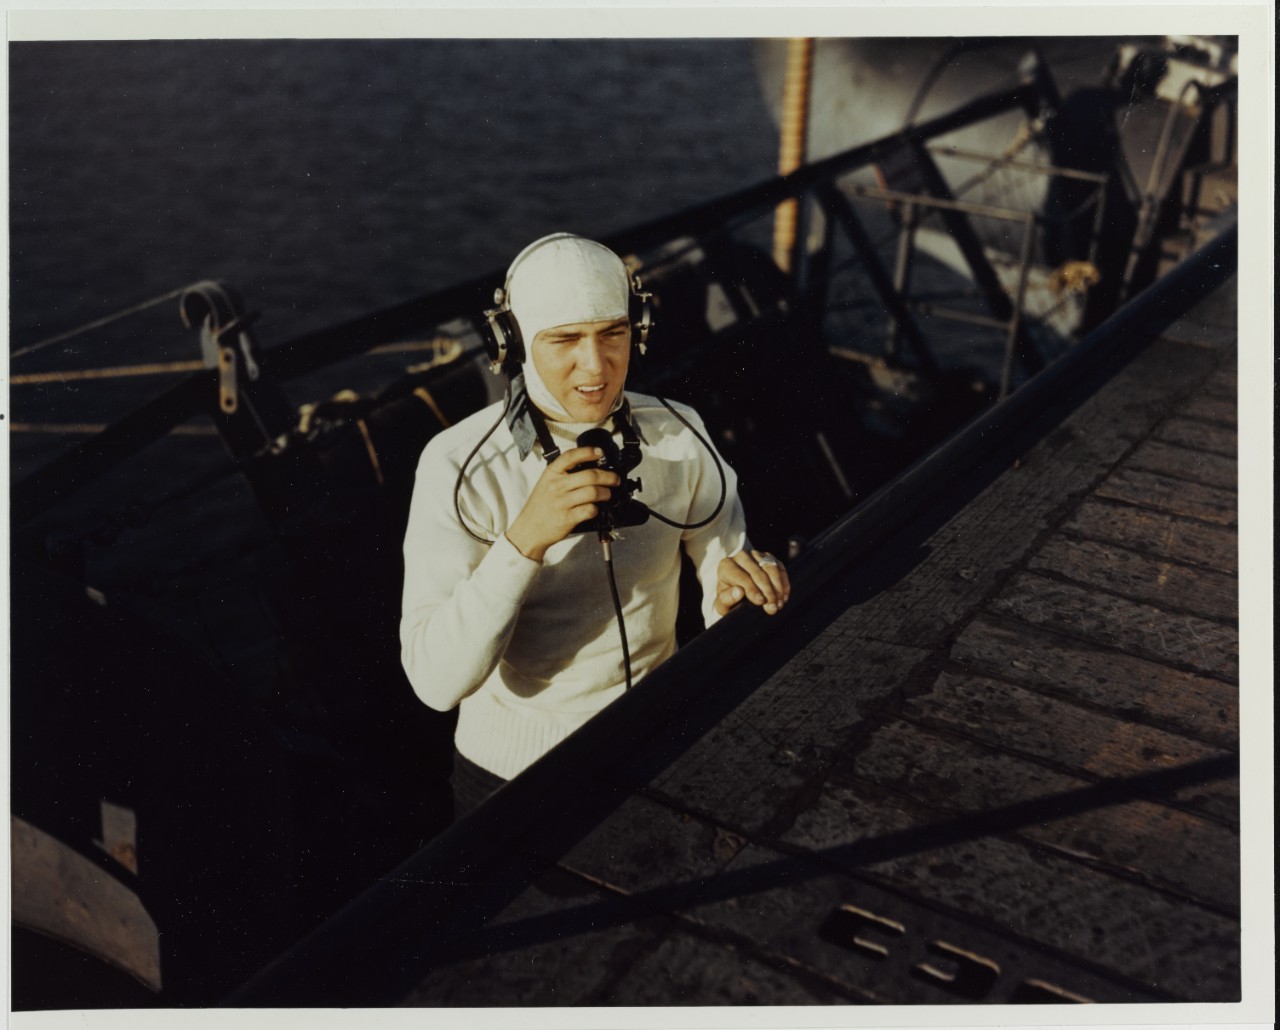 Flight Deck "Talker" mans his station in the catwalk of a training escort carrier, circa 1943-1945